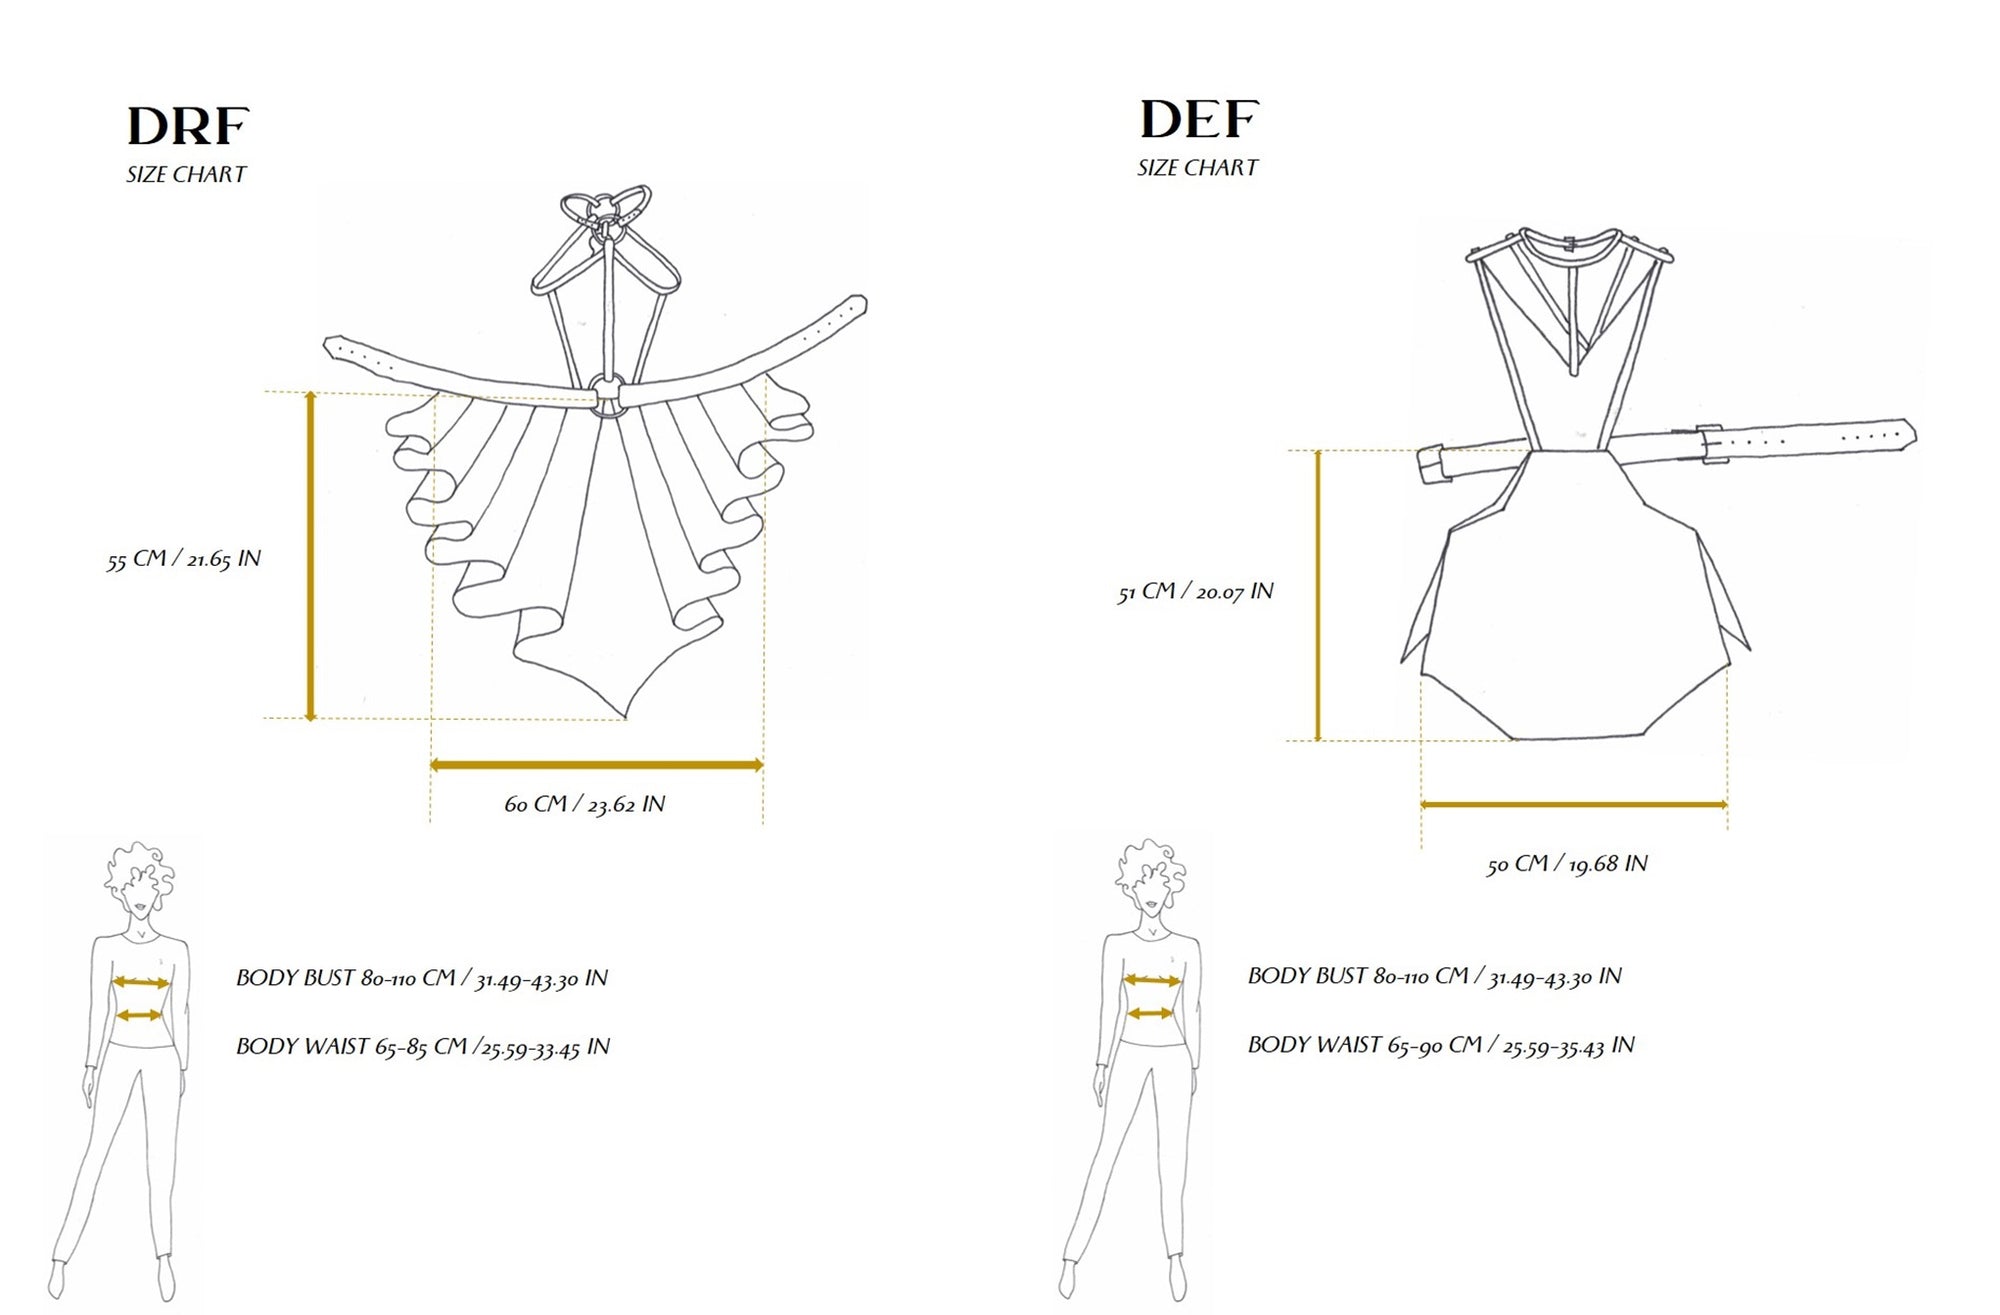 Size charts of Eskandur luxury premium DEF and DRF aprons